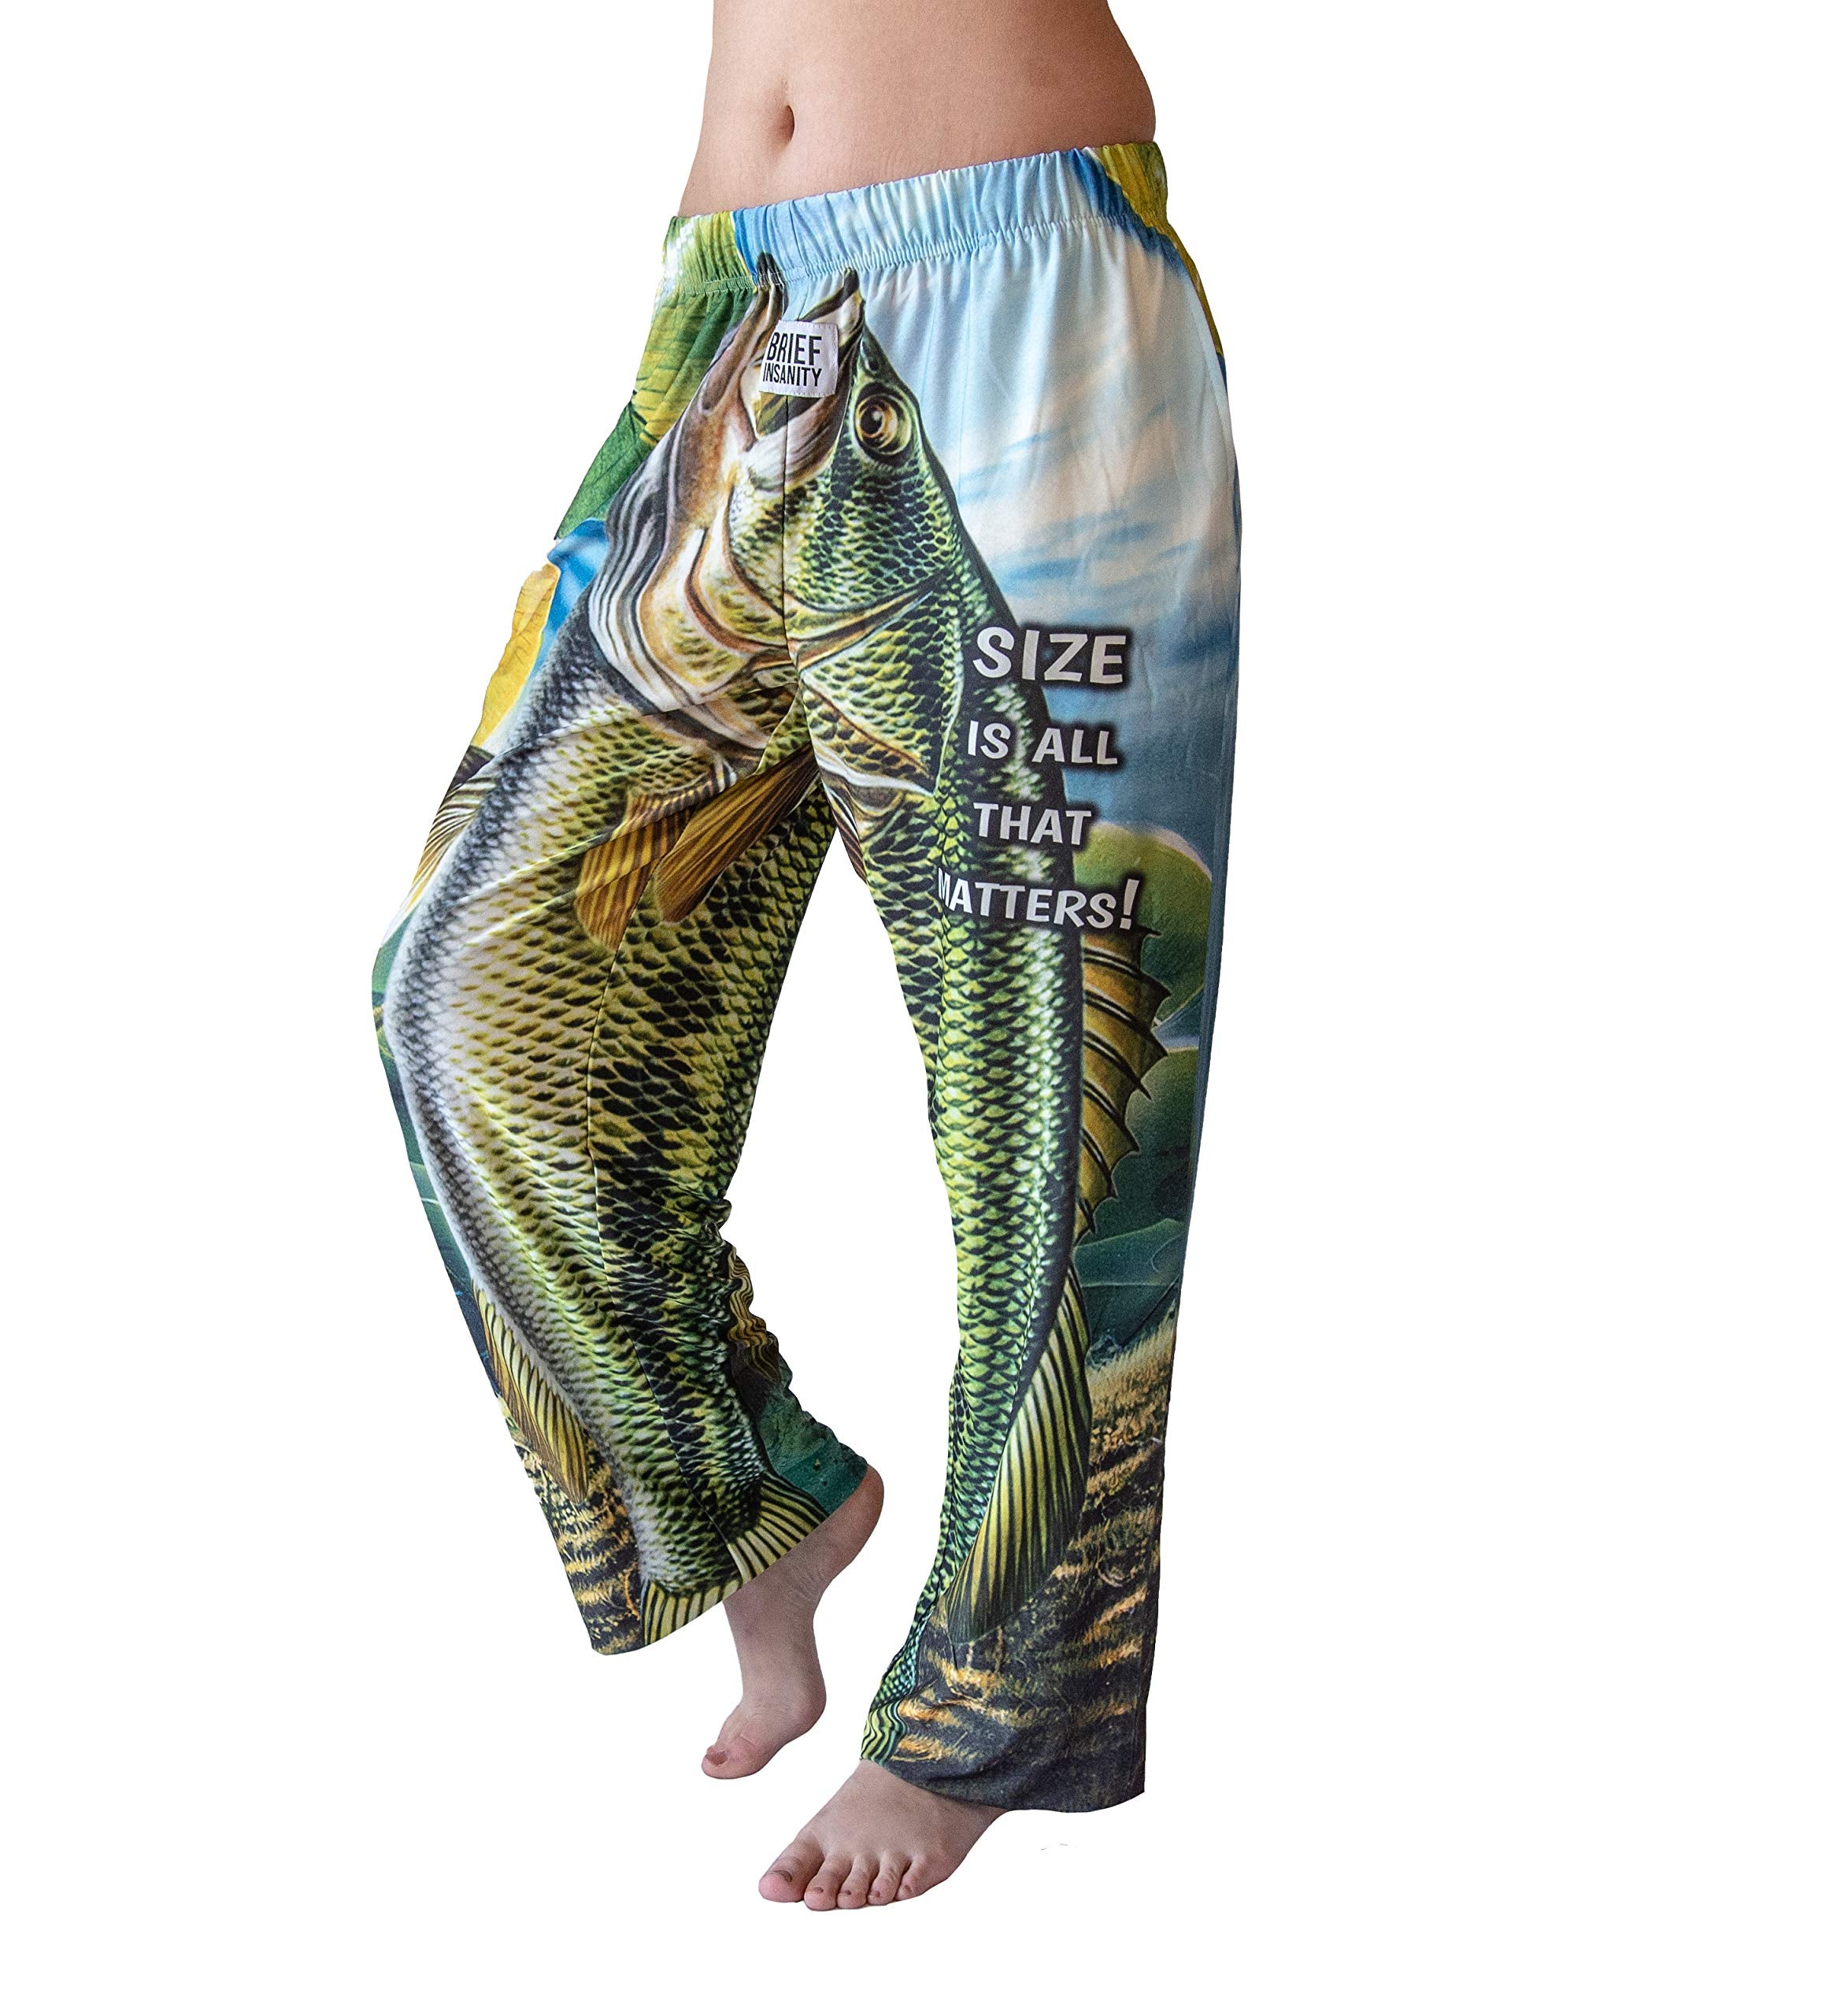 Waist down photo of model wearing Big Fish Size Matters pajama lounge pants side view (white background)